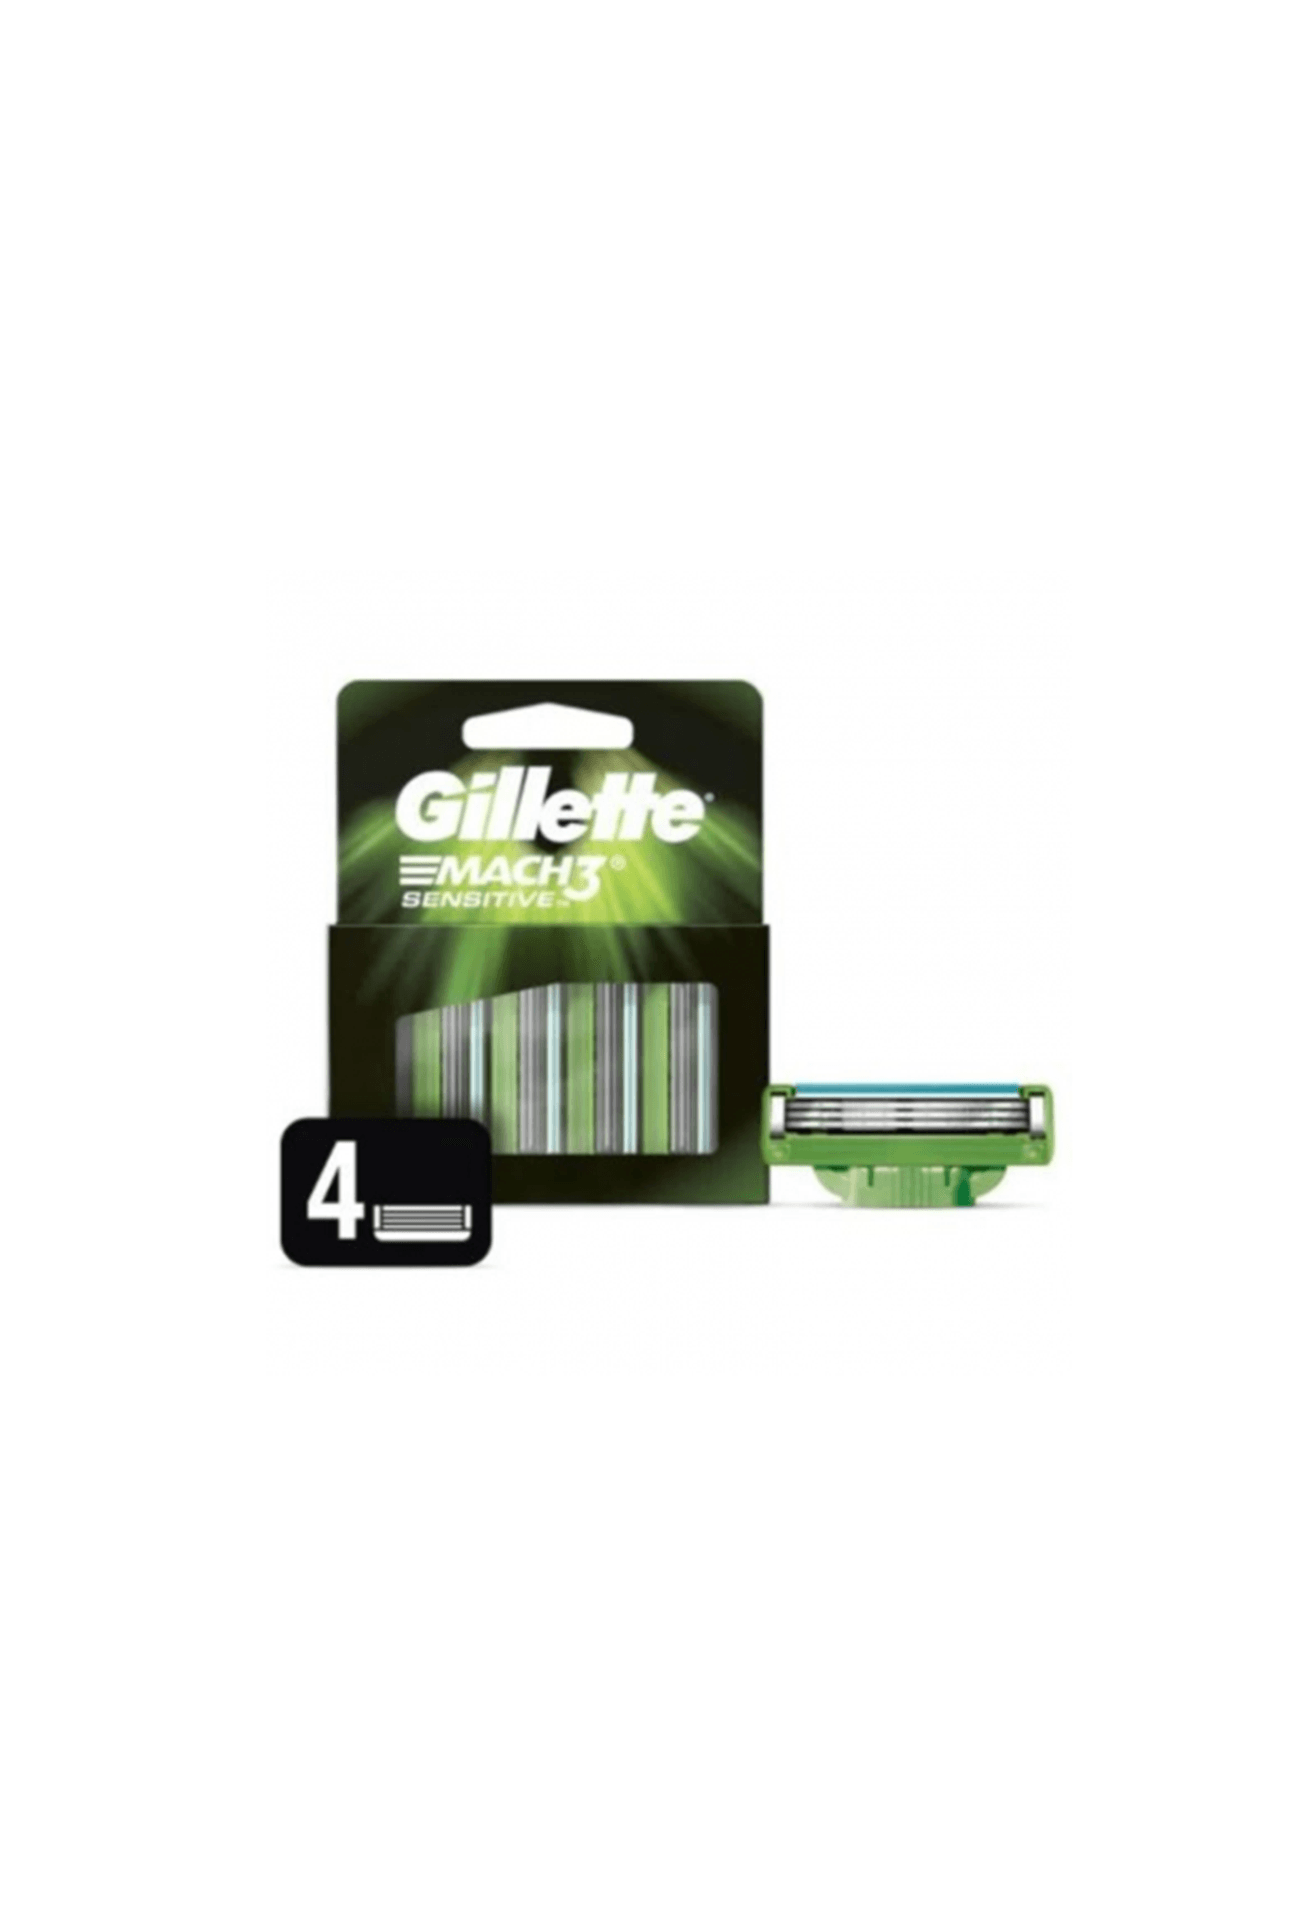 Gillette-Mach-3-Sensitive-Cartuchos-x-4-unid-7500435185219_img1